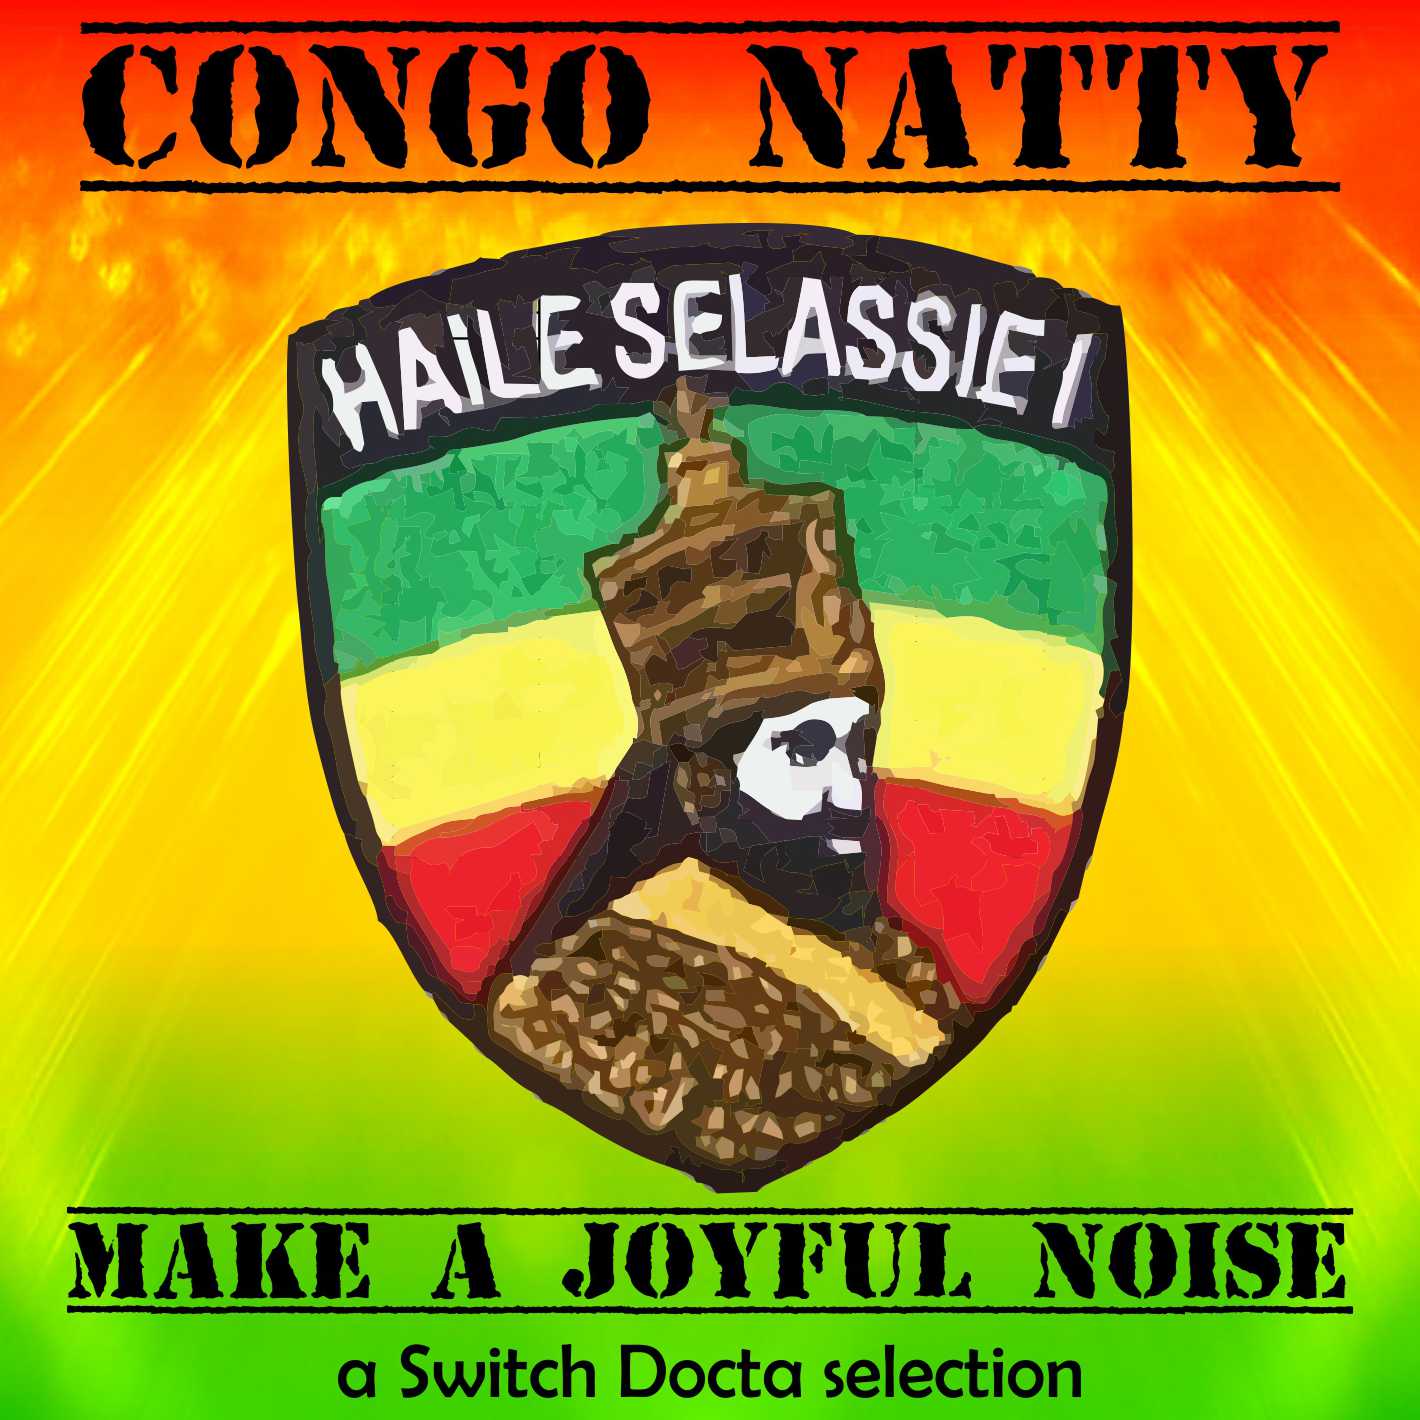 Congo Natty - Make a Joyful Noise